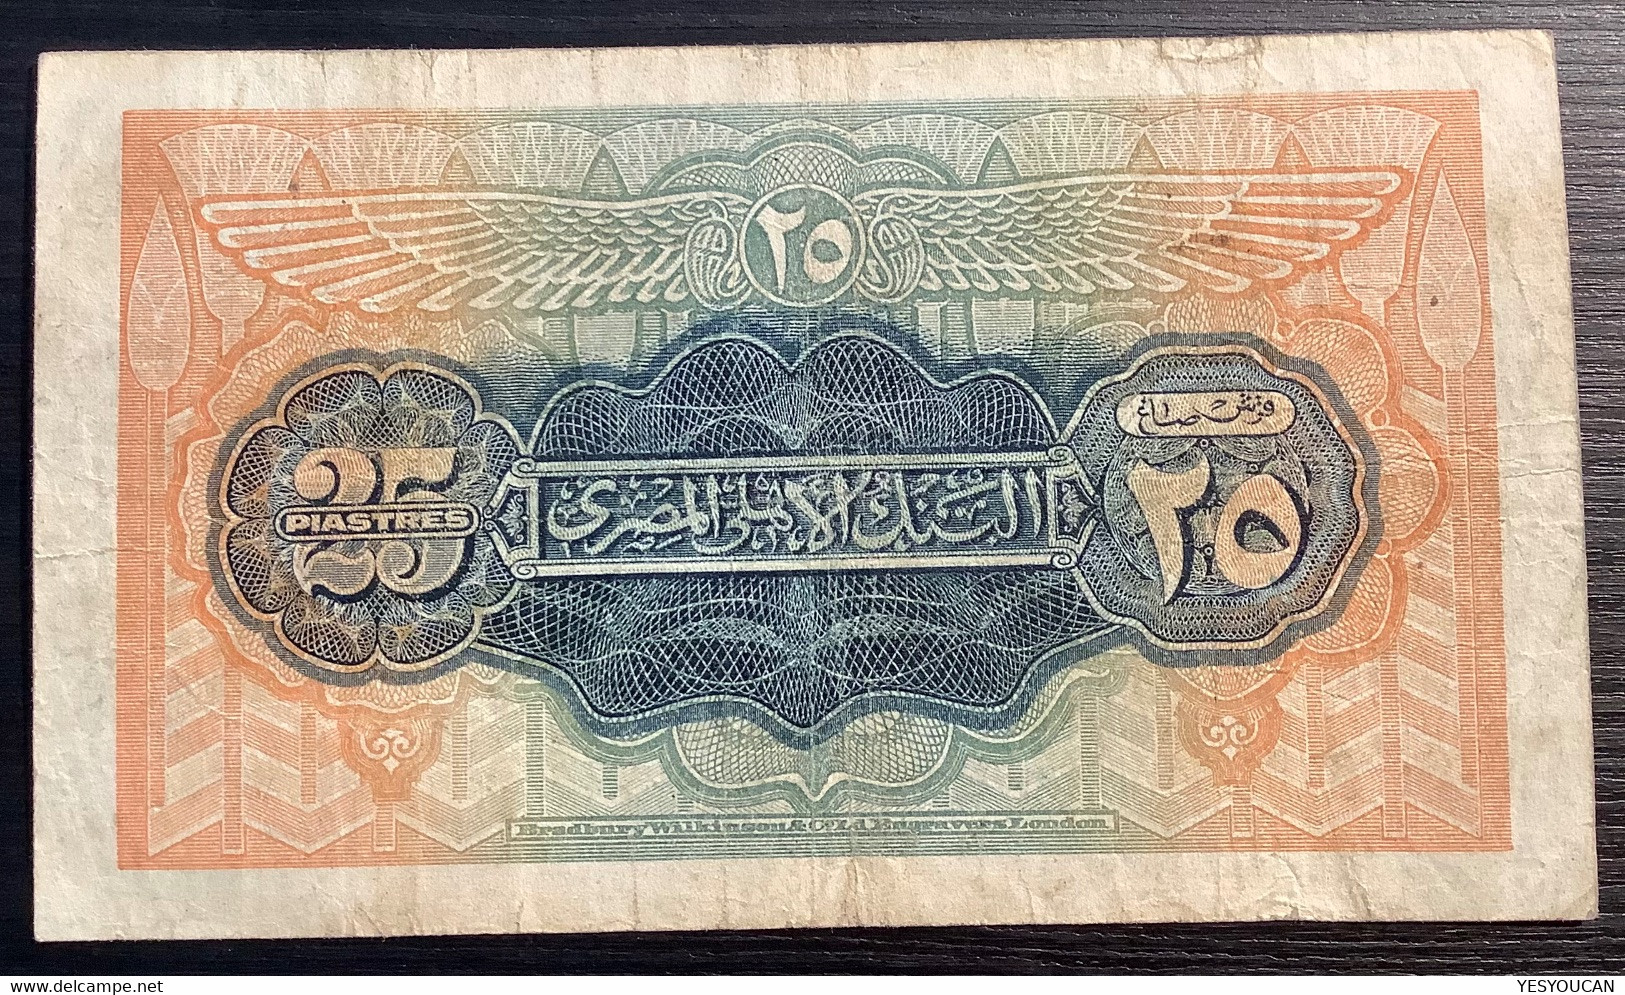 Egypt 1948 25 Piastres  P-10d Leith-Ross Sign, 1913-17 Issue(banknote Paper Money Billet De Banque Egypte Bitcoin Crypto - Egypte